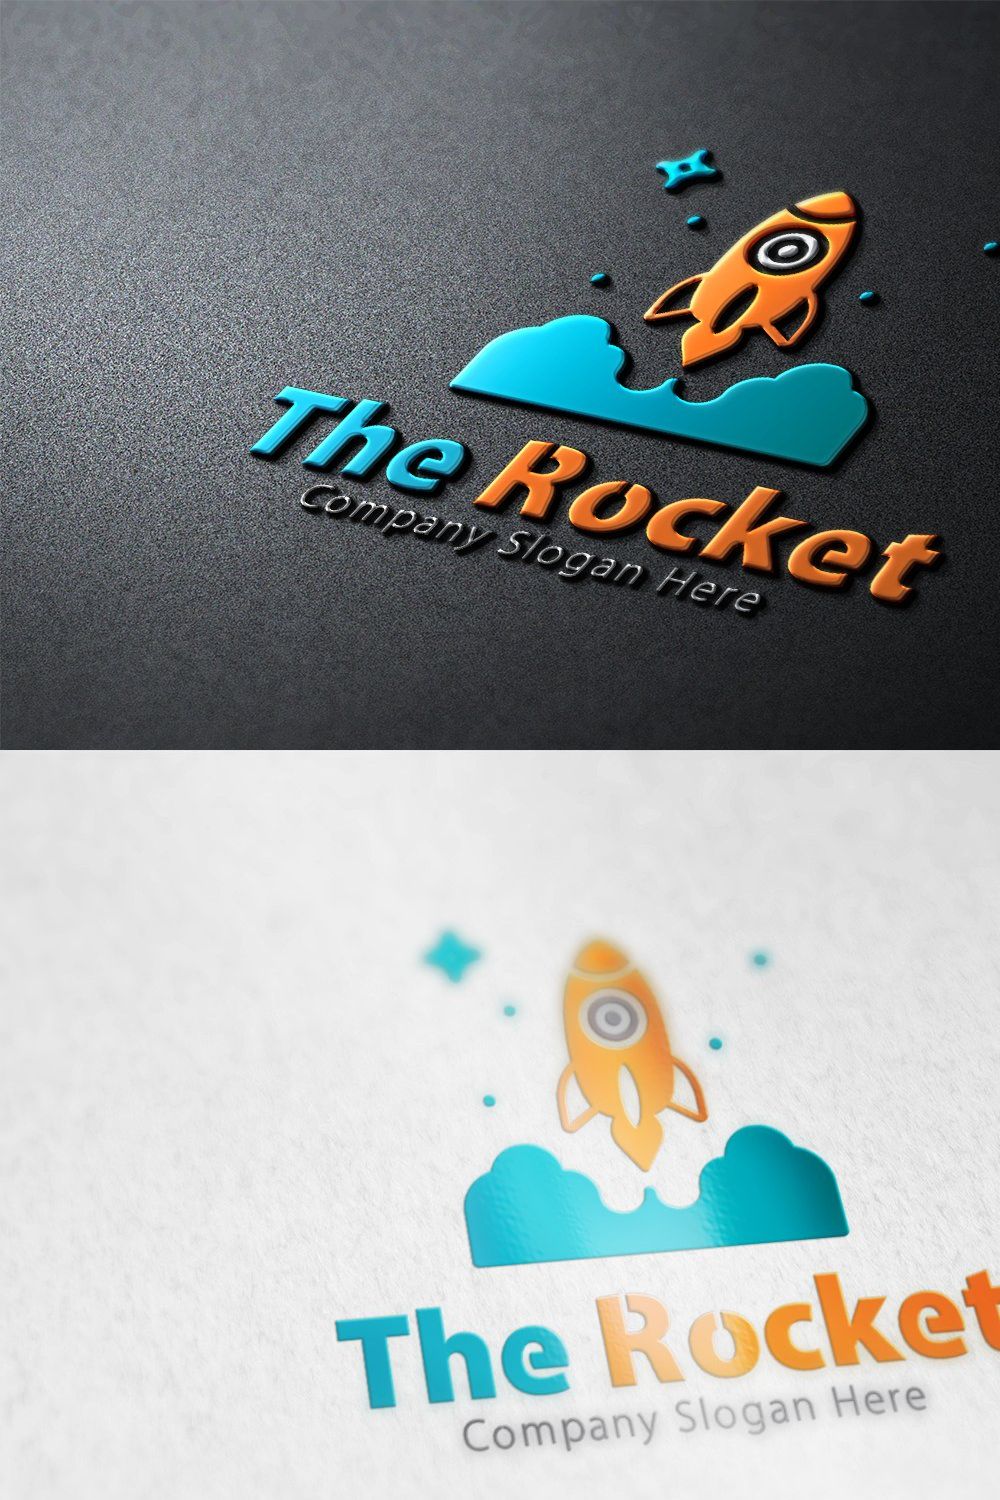 Rocket Logo pinterest preview image.